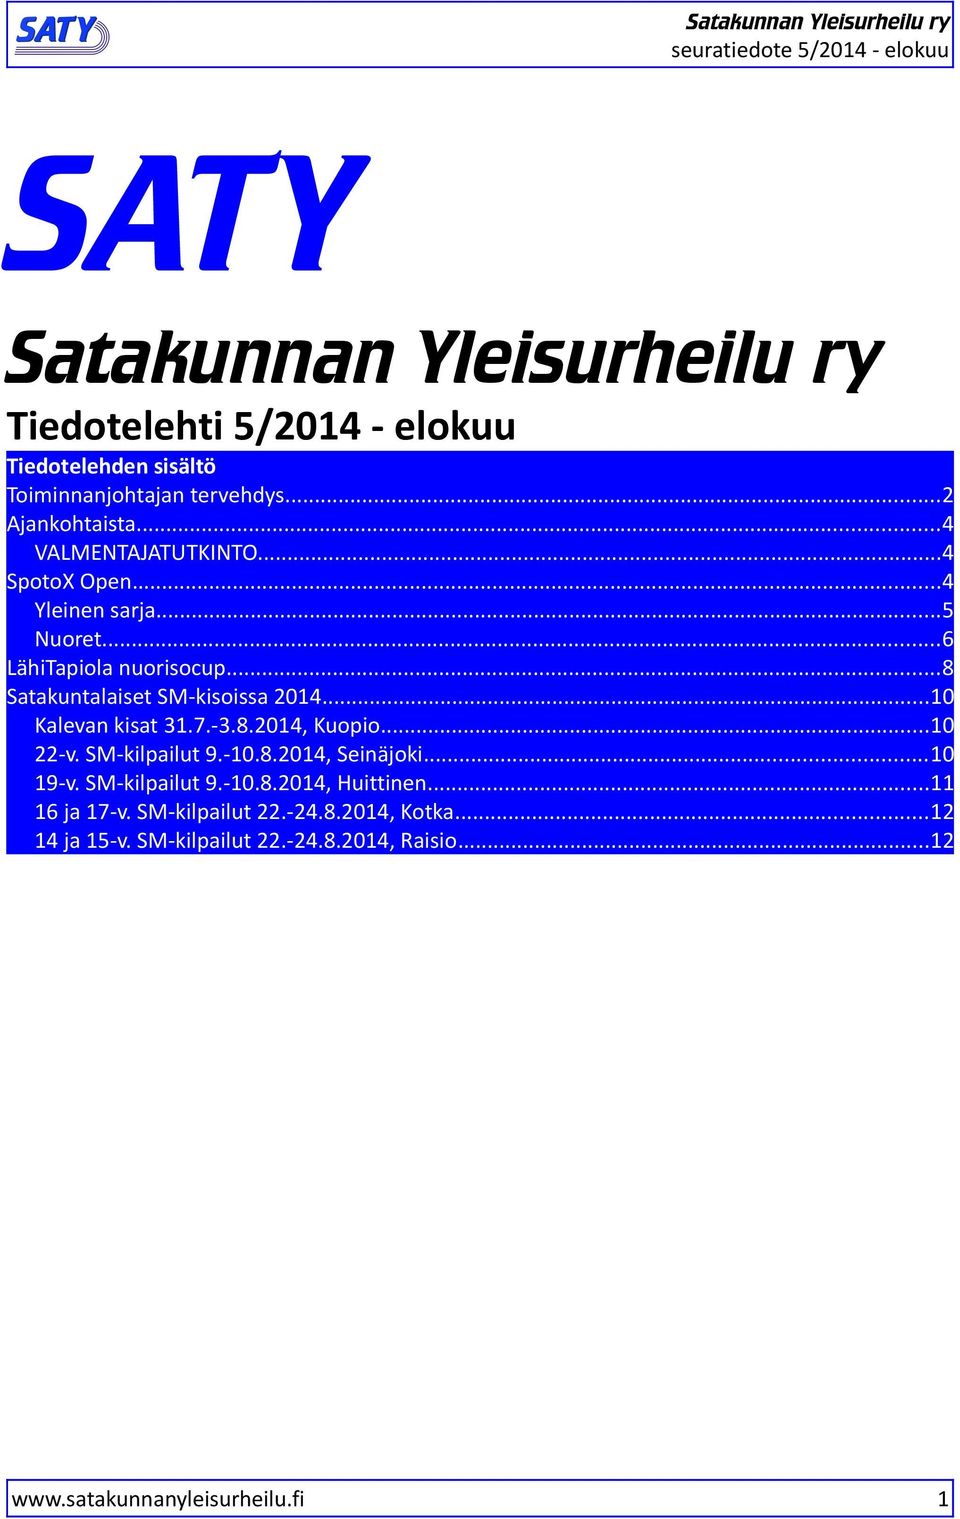 .. Satakuntalaiset SM-kisoissa 204...0 Kalevan kisat 3..-3..204, Kuopio...0 22-v. SM-kilpailut.-0.